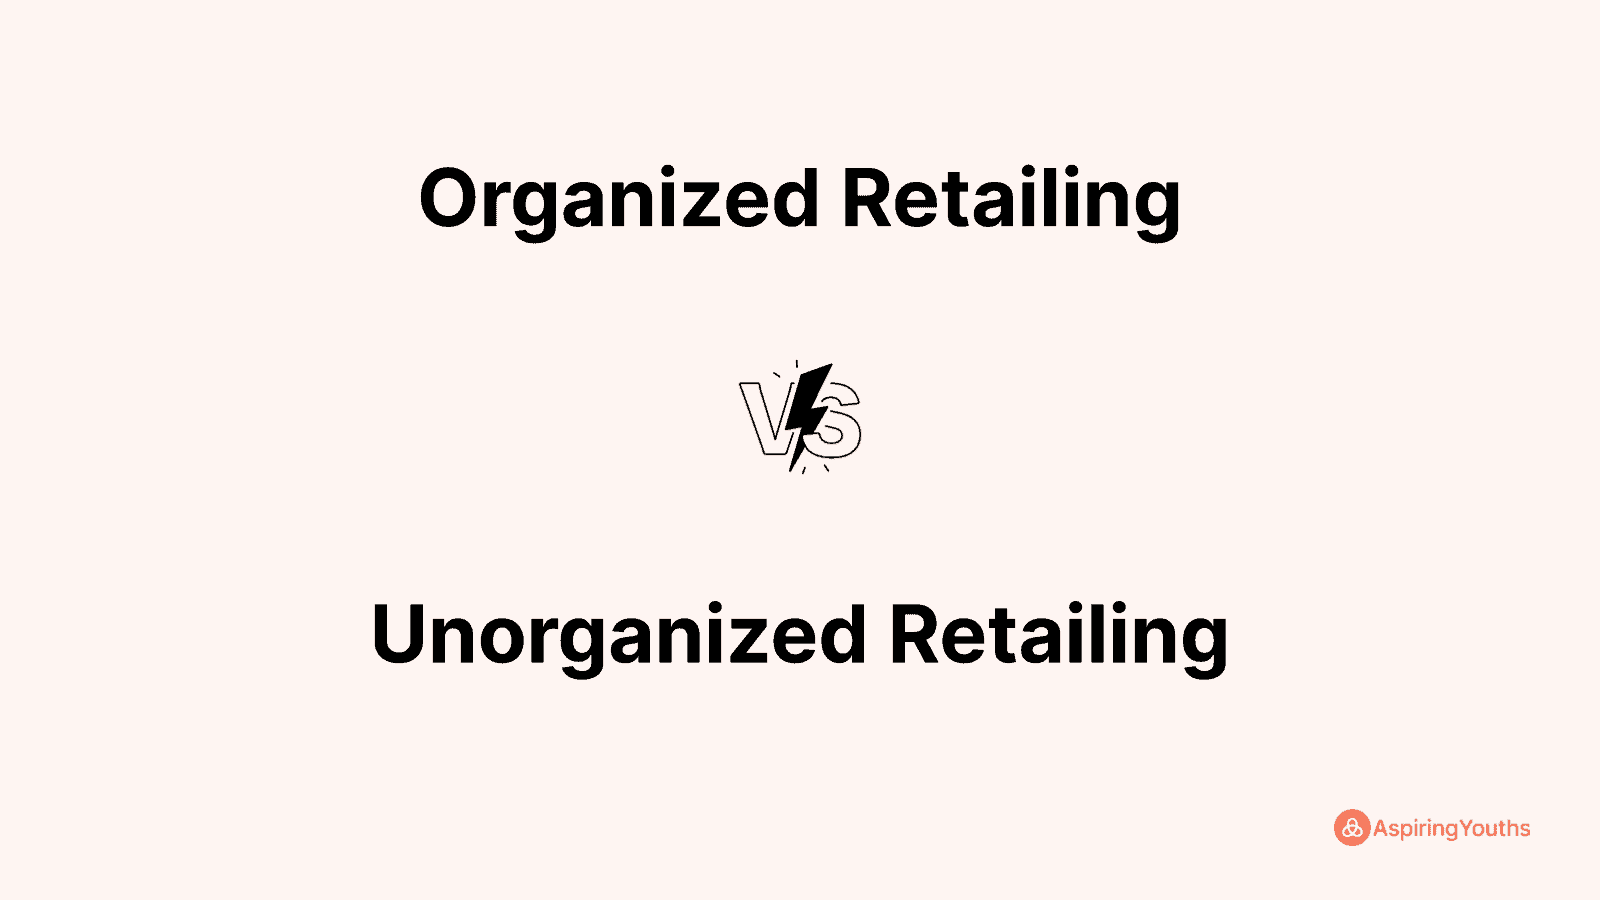 Organized Retailing vs Unorganized Retailing